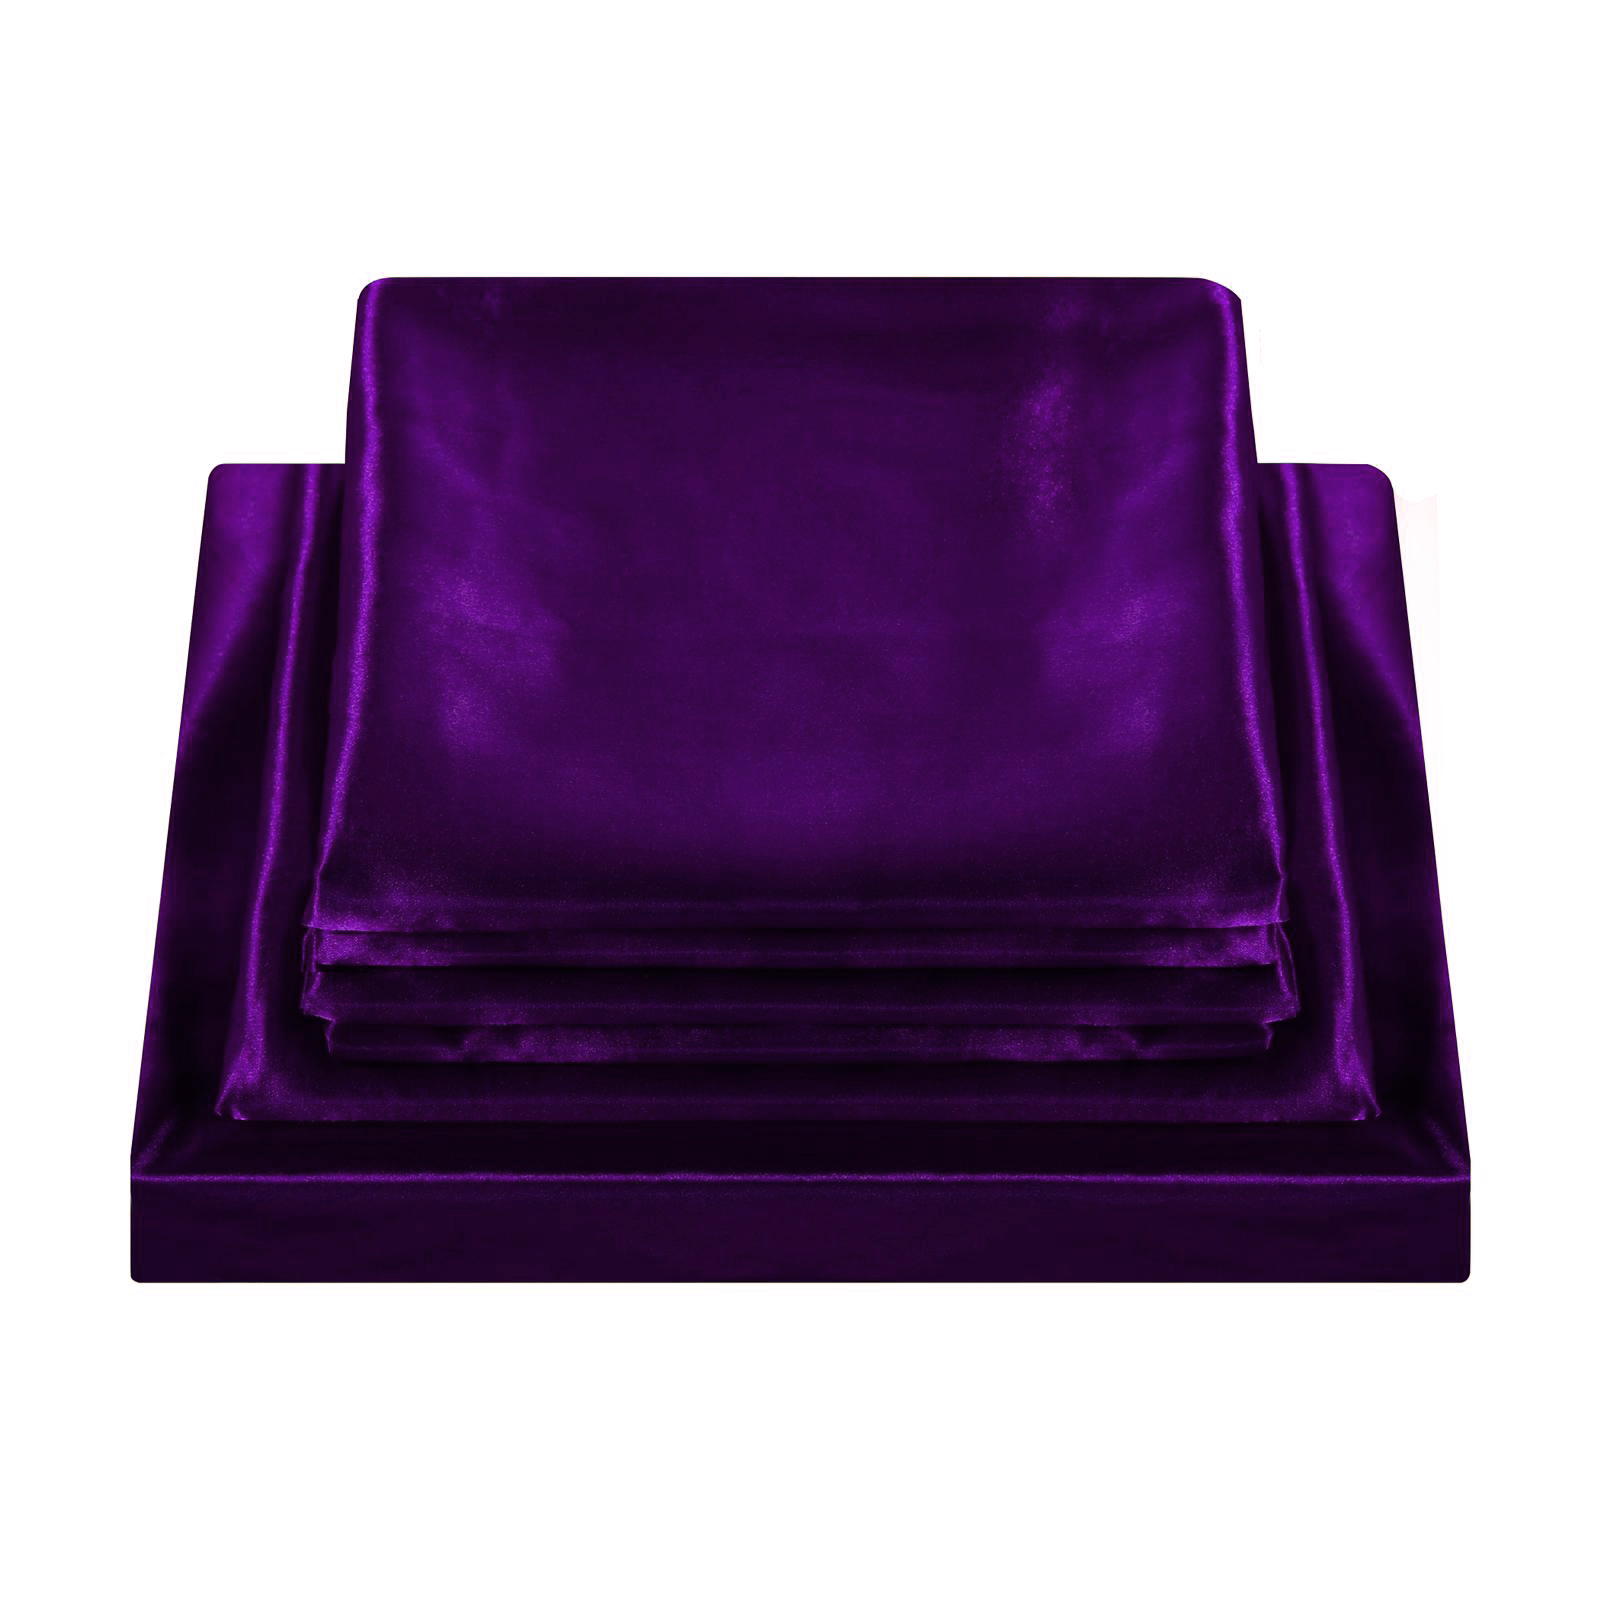 Purple 6pc Satin Panel King Bed Duvet Quilt Cover Set